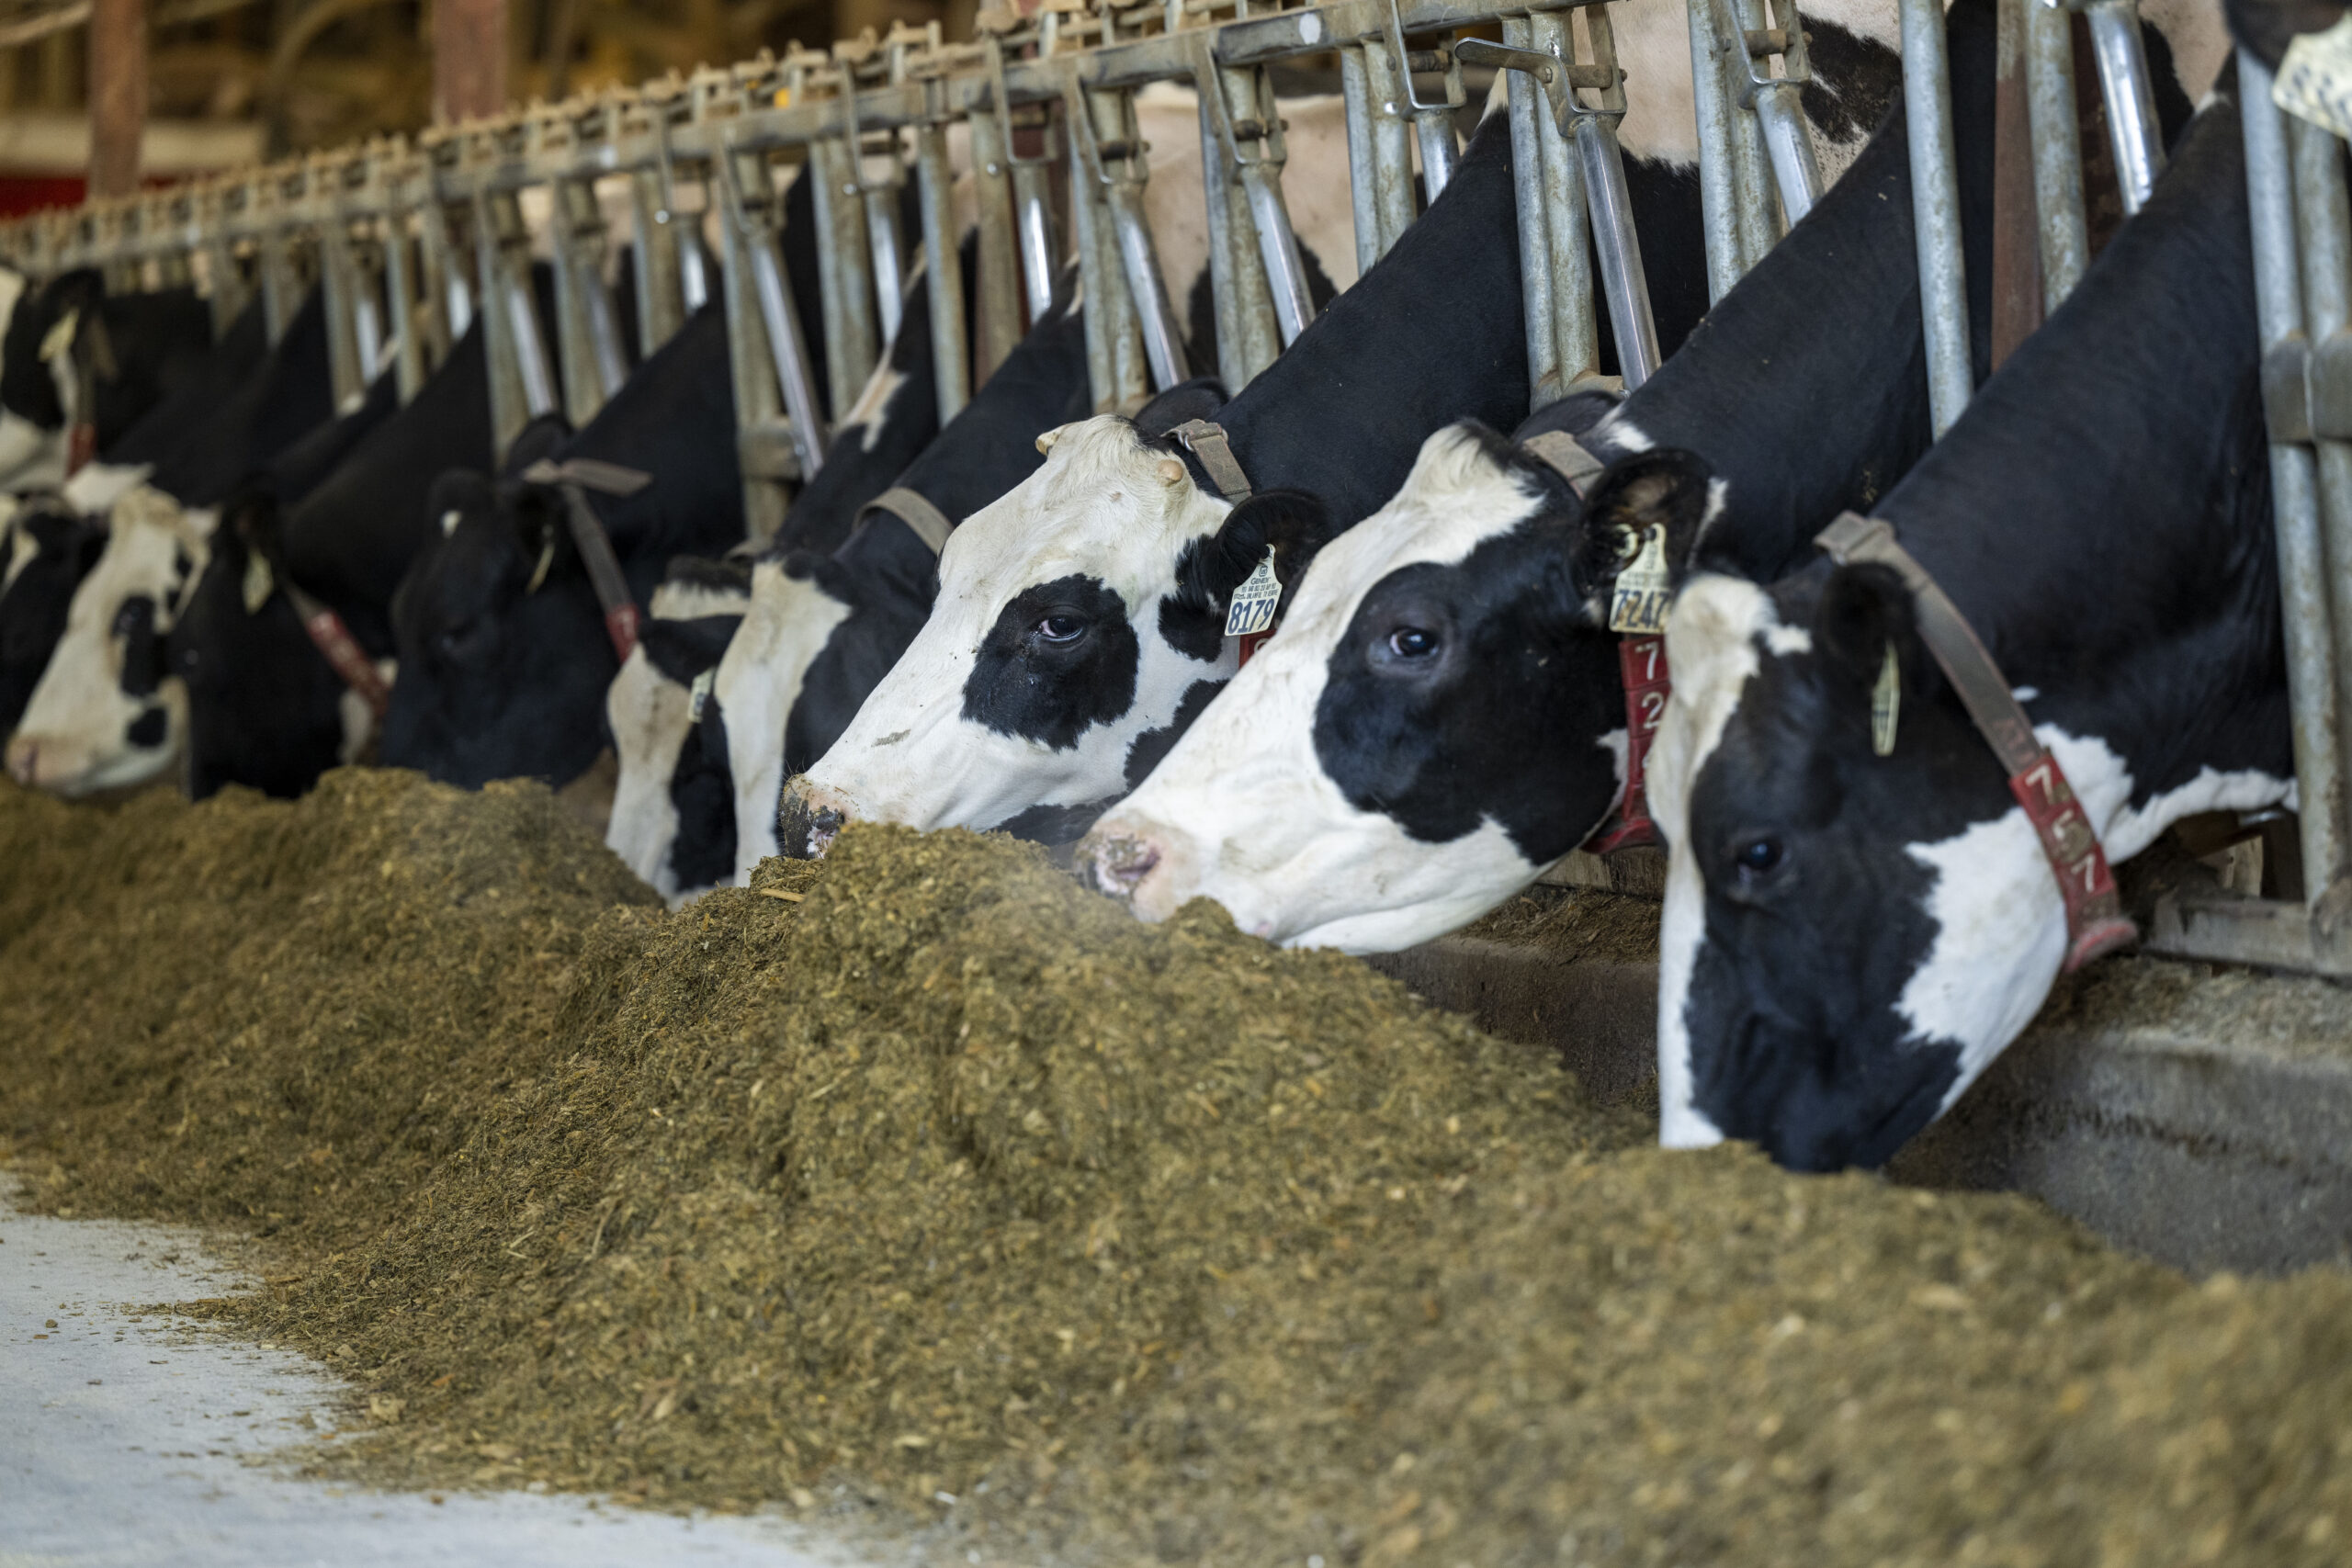 Cows inside barn eating feed